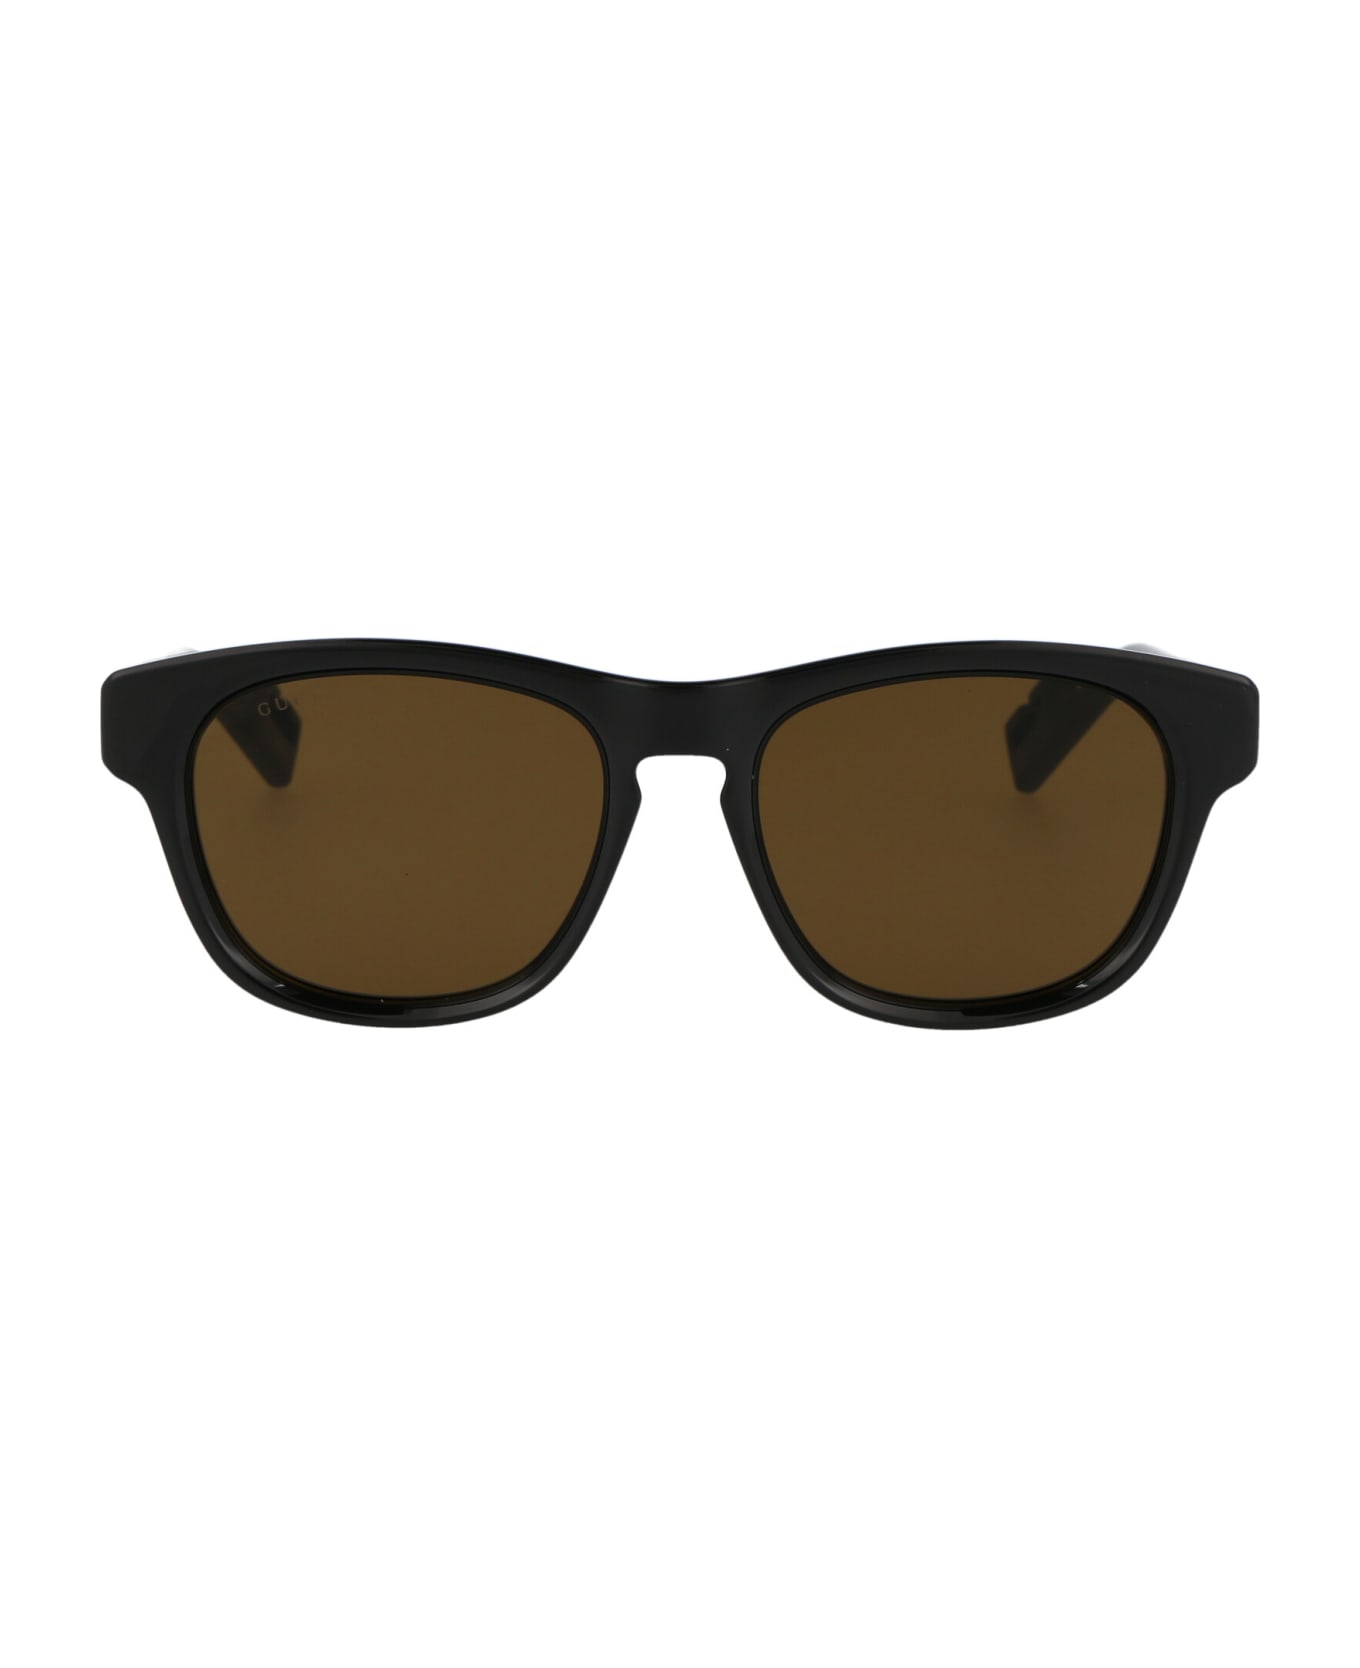 Gucci Eyewear Gg1238s Sunglasses have - 004 BLACK BLACK BROWN